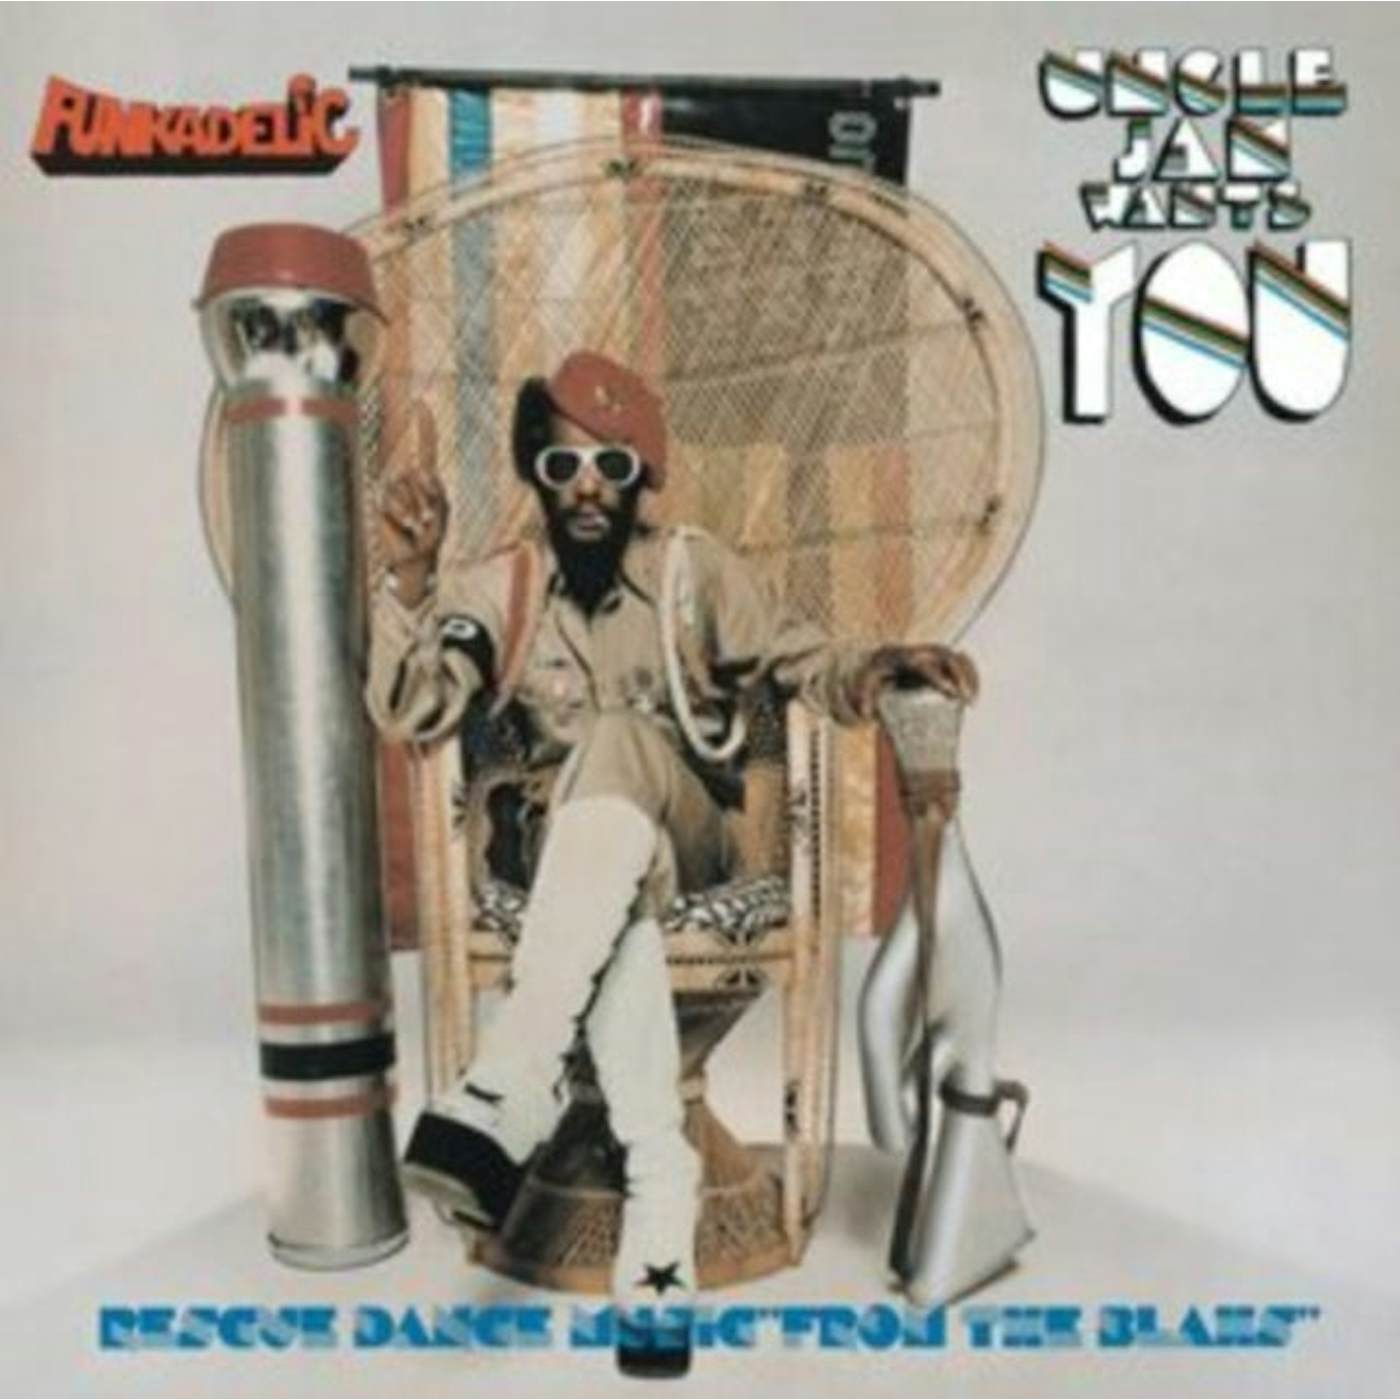 Funkadelic LP - Uncle Jam Wants You (Vinyl)